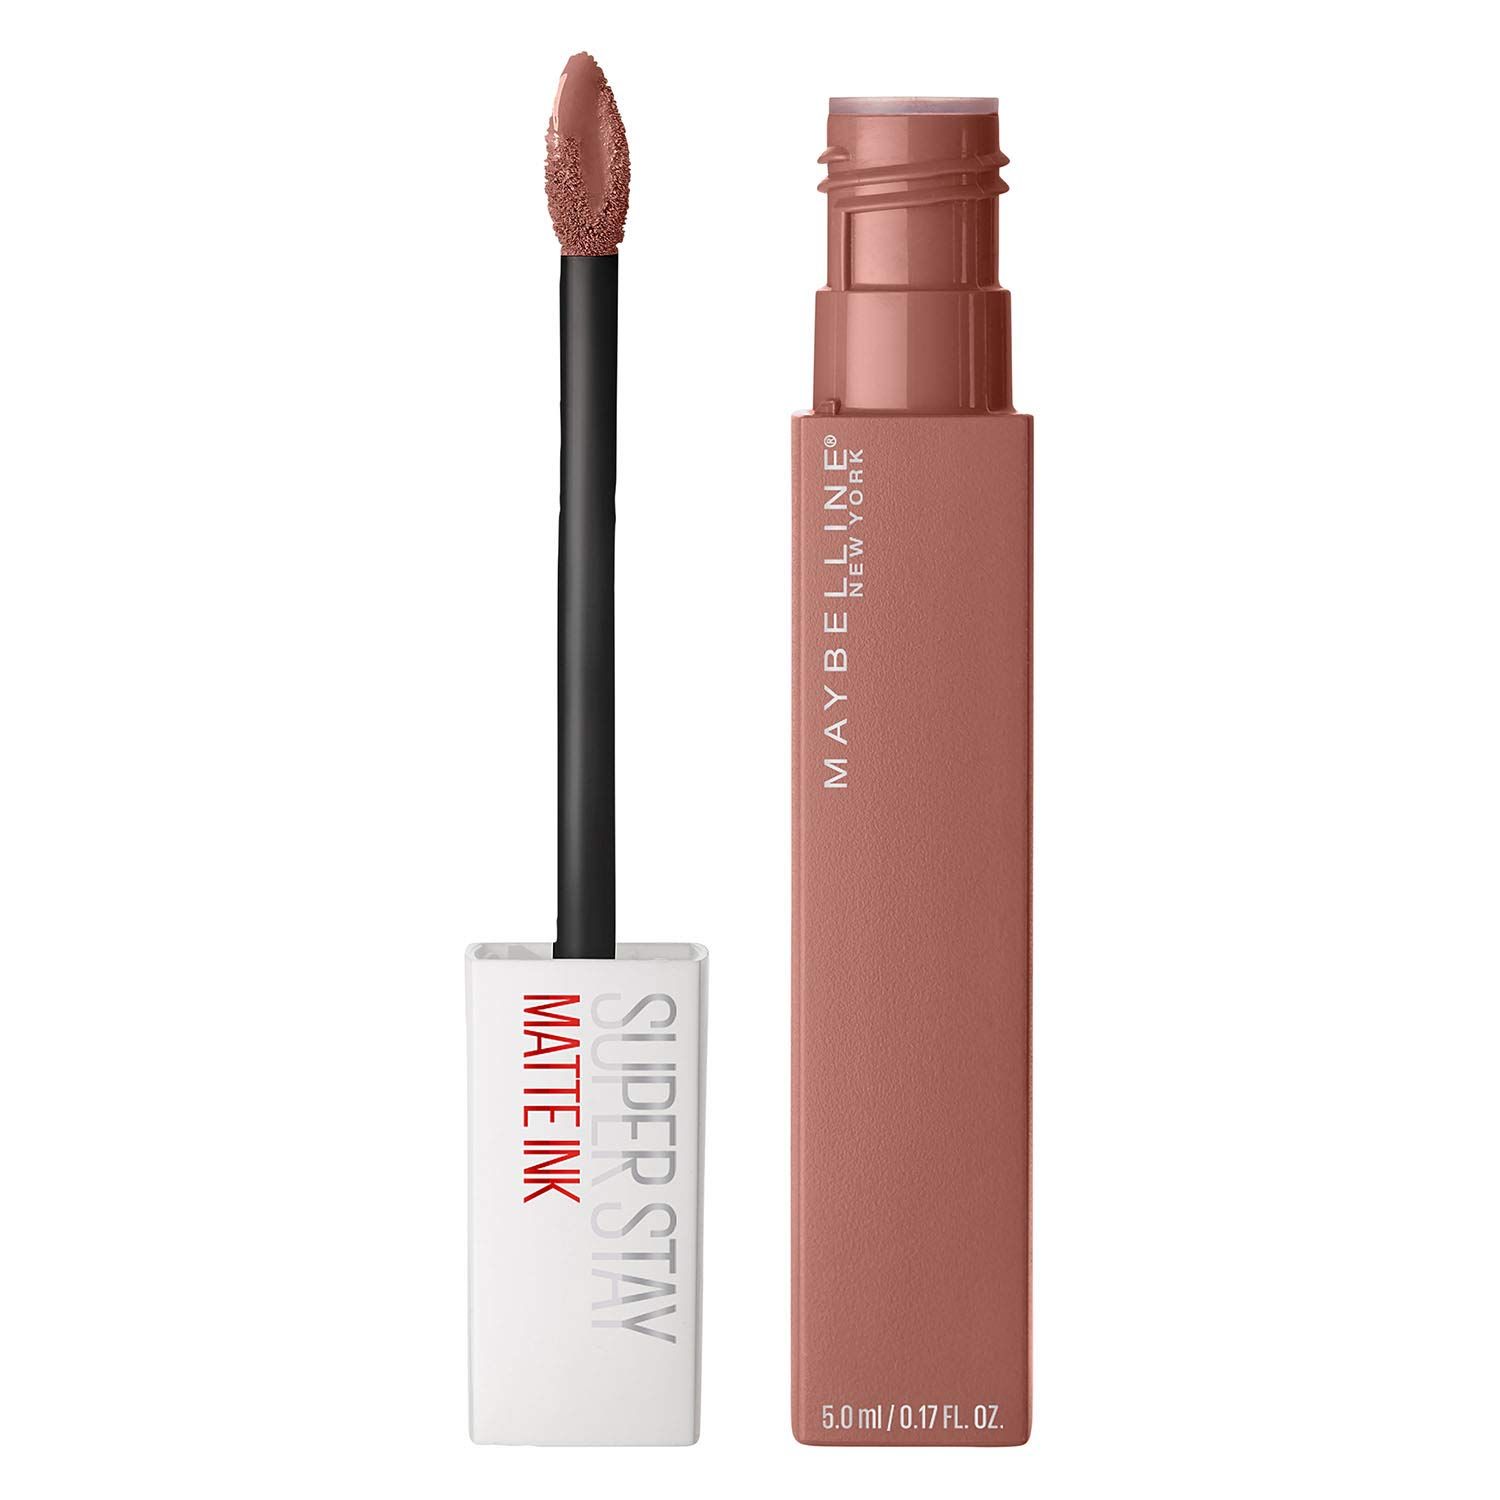 Maybelline SuperStay Matte Ink Un-nude Liquid Lipstick, Seductress, 0.17 Fl Oz, Pack of 1 | Amazon (US)